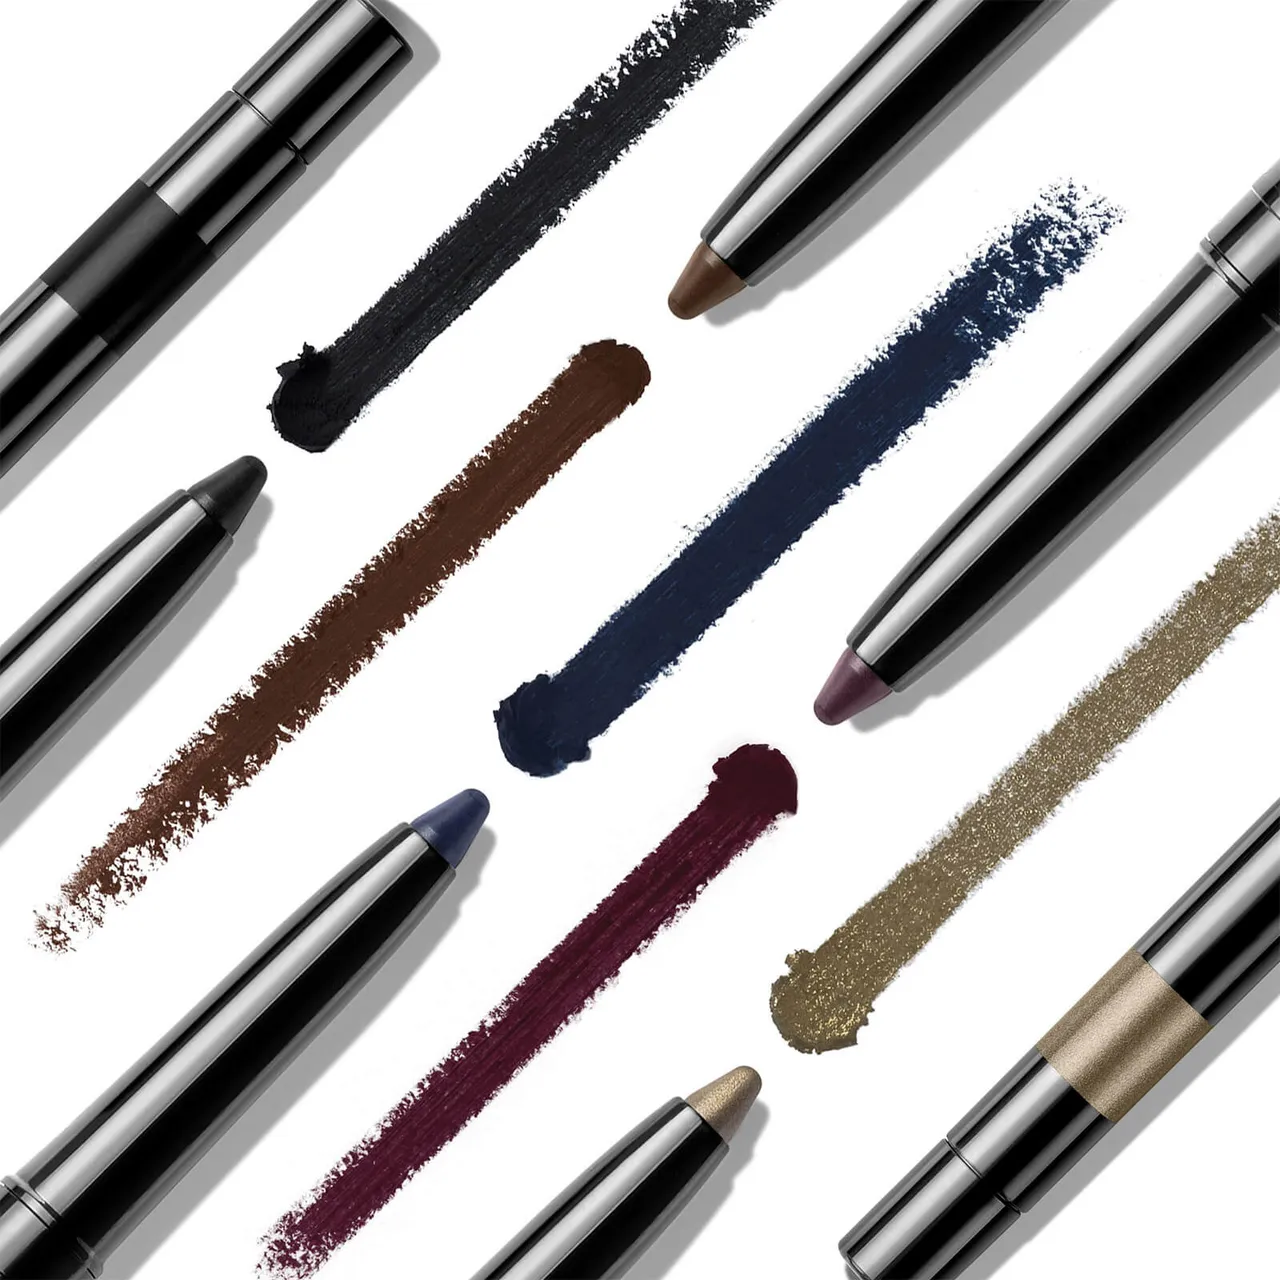 Guerlain The Eye Pencil Intense Colour Long-Lasting and Waterproof 0.035g (Various Shades) - 01 Black Ebony